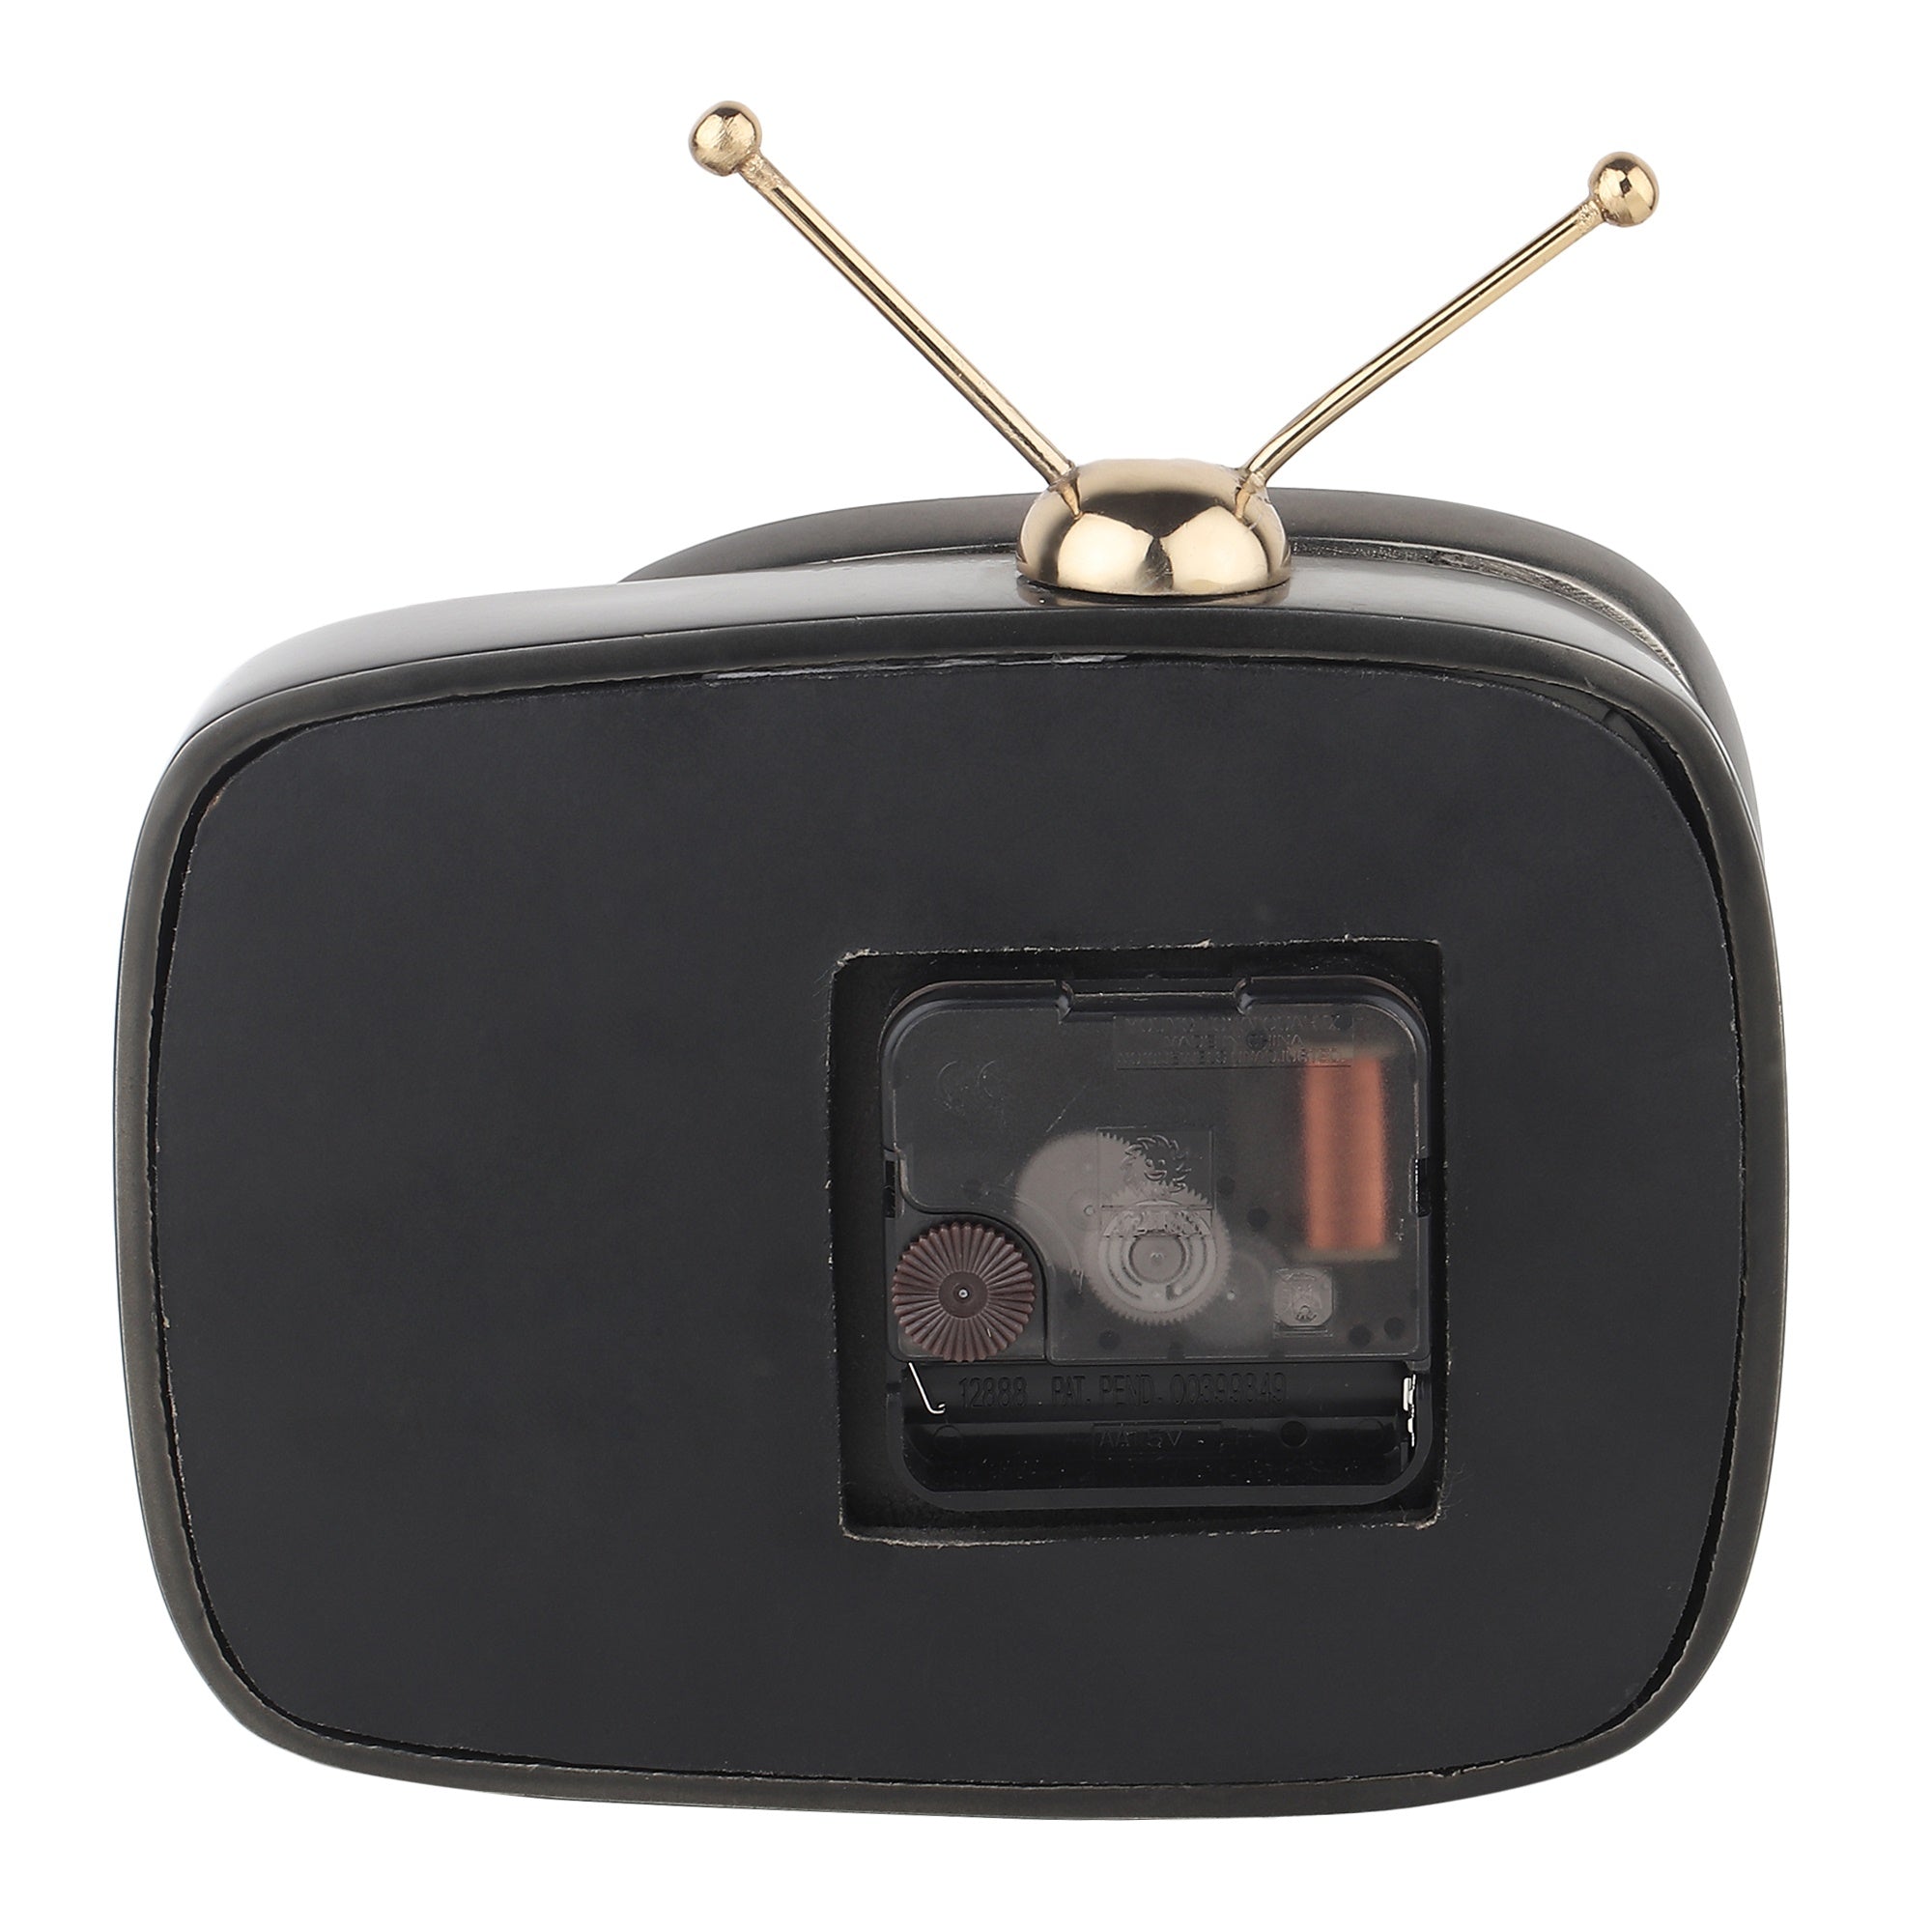 Retro TV Timepiece In Black